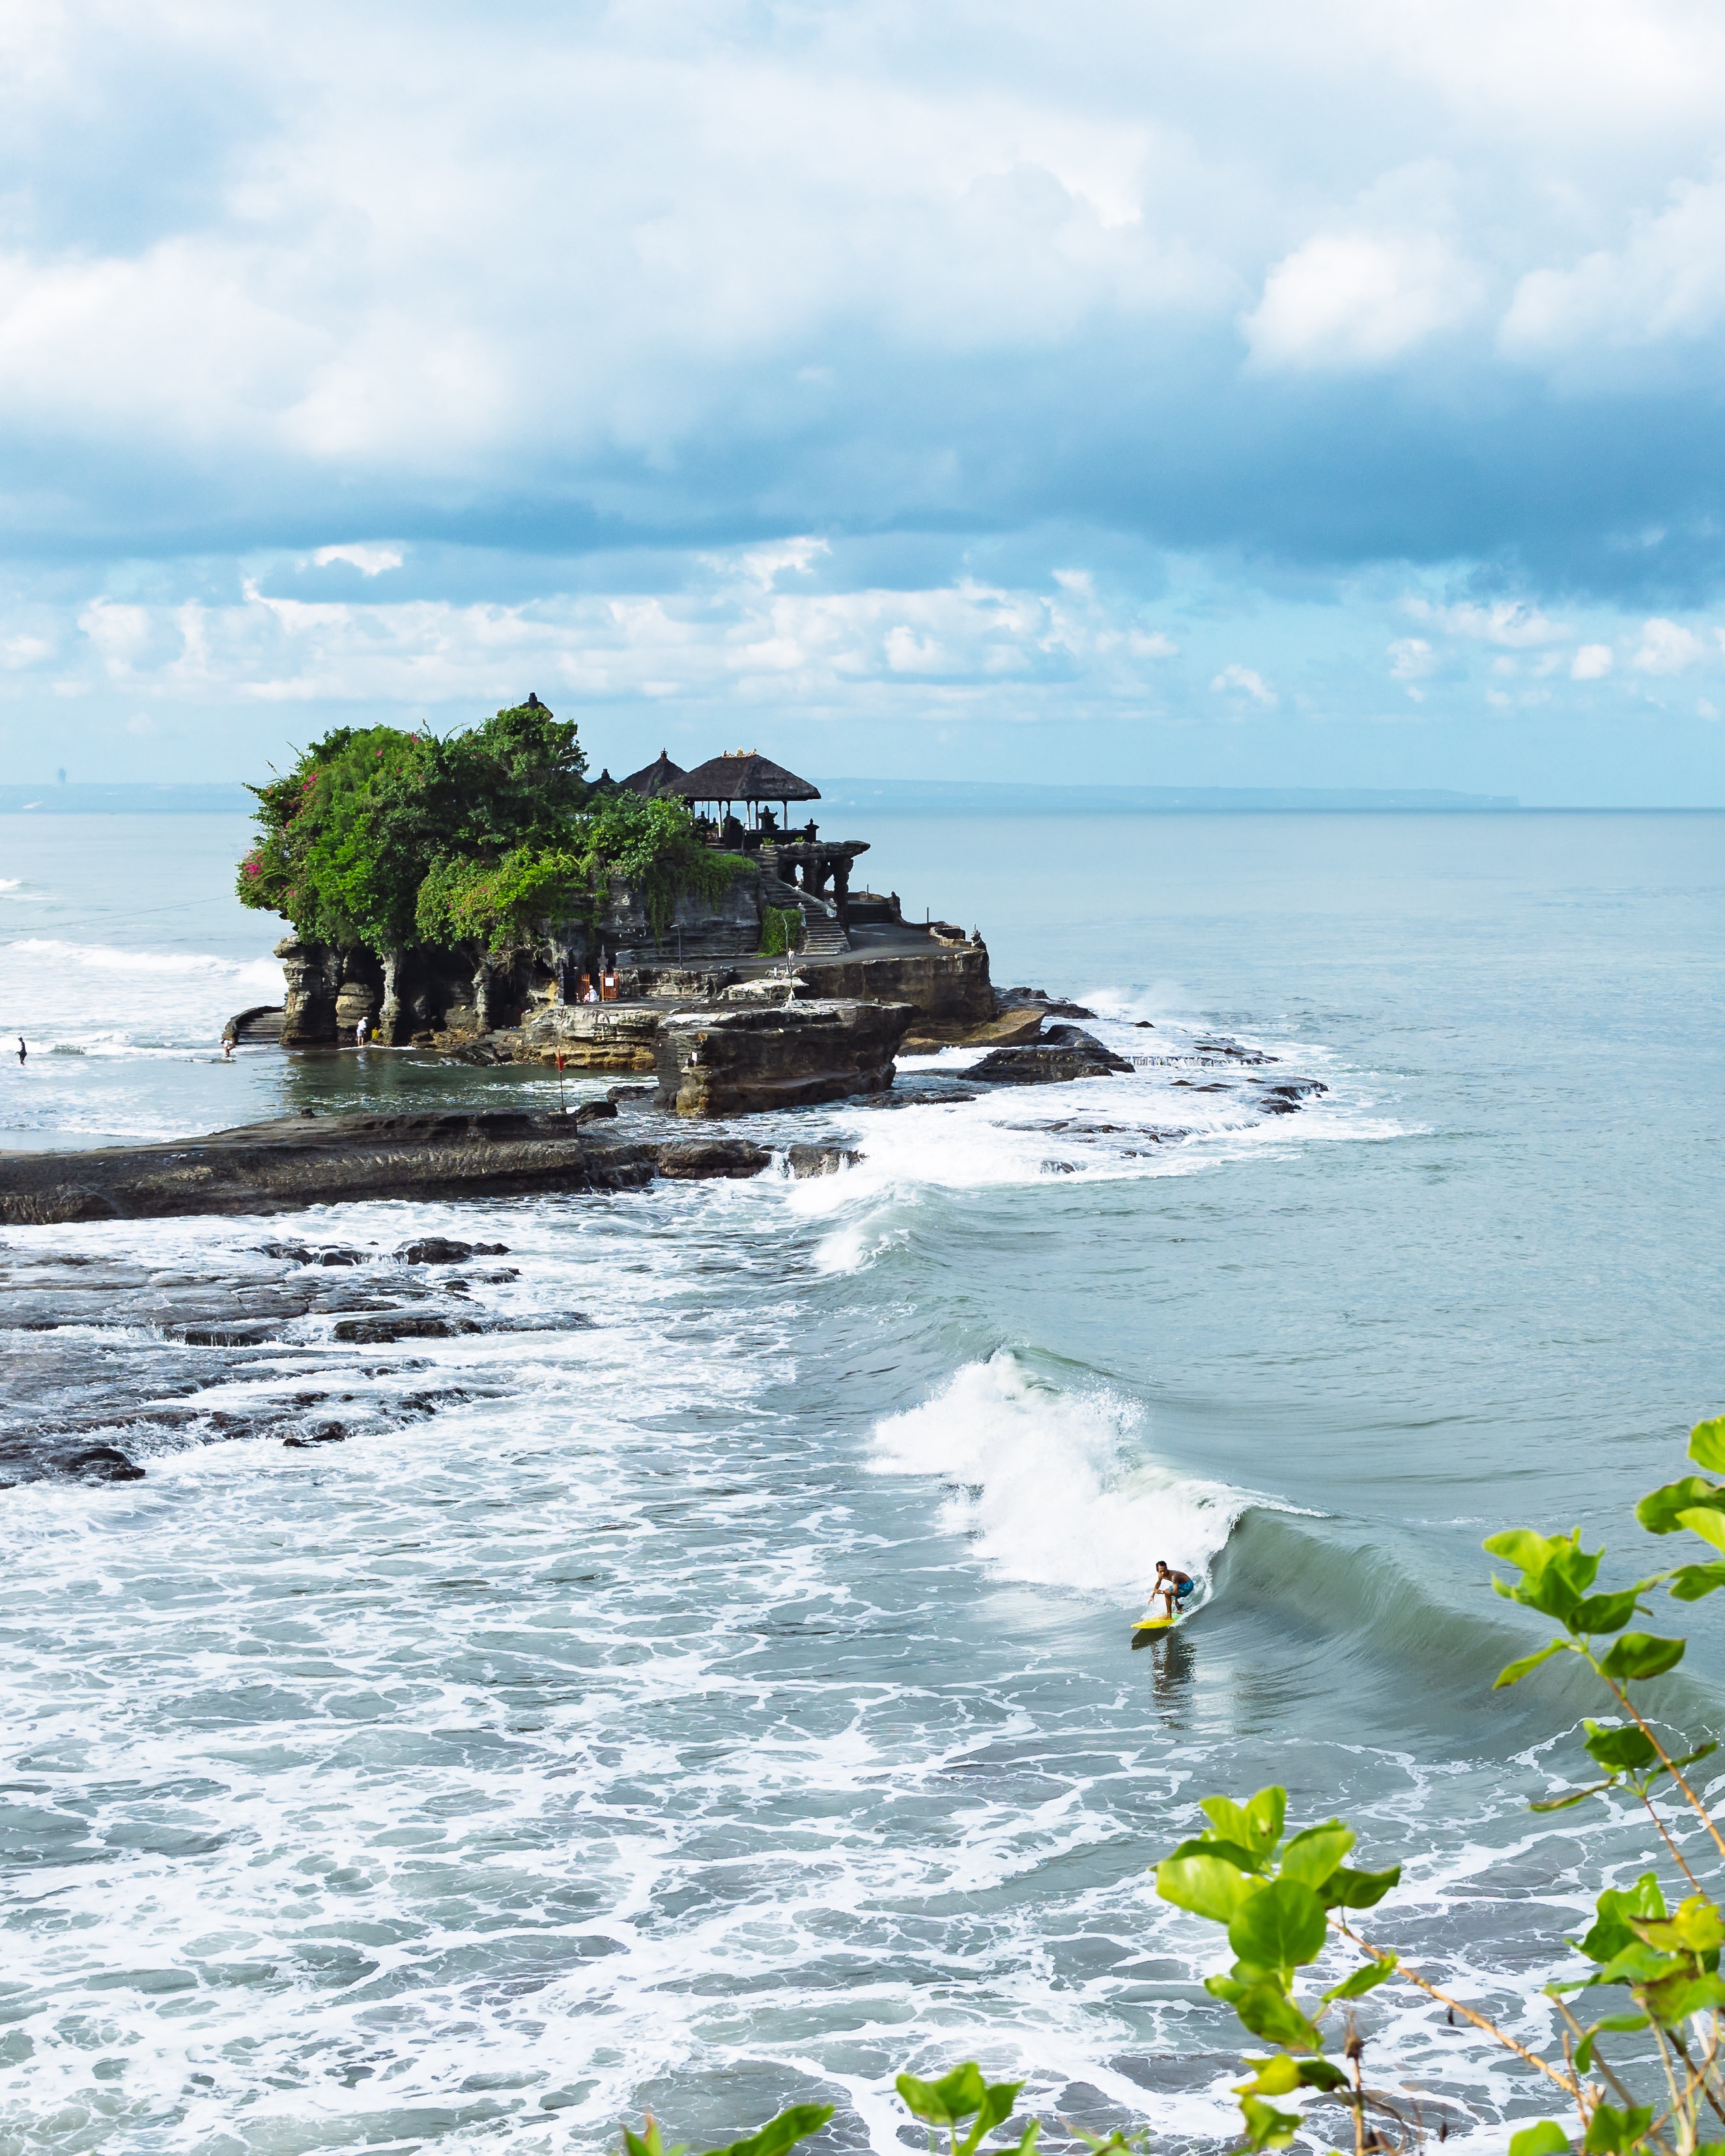 Surfing at Tanah Lot, Bali, Indonesia 2022